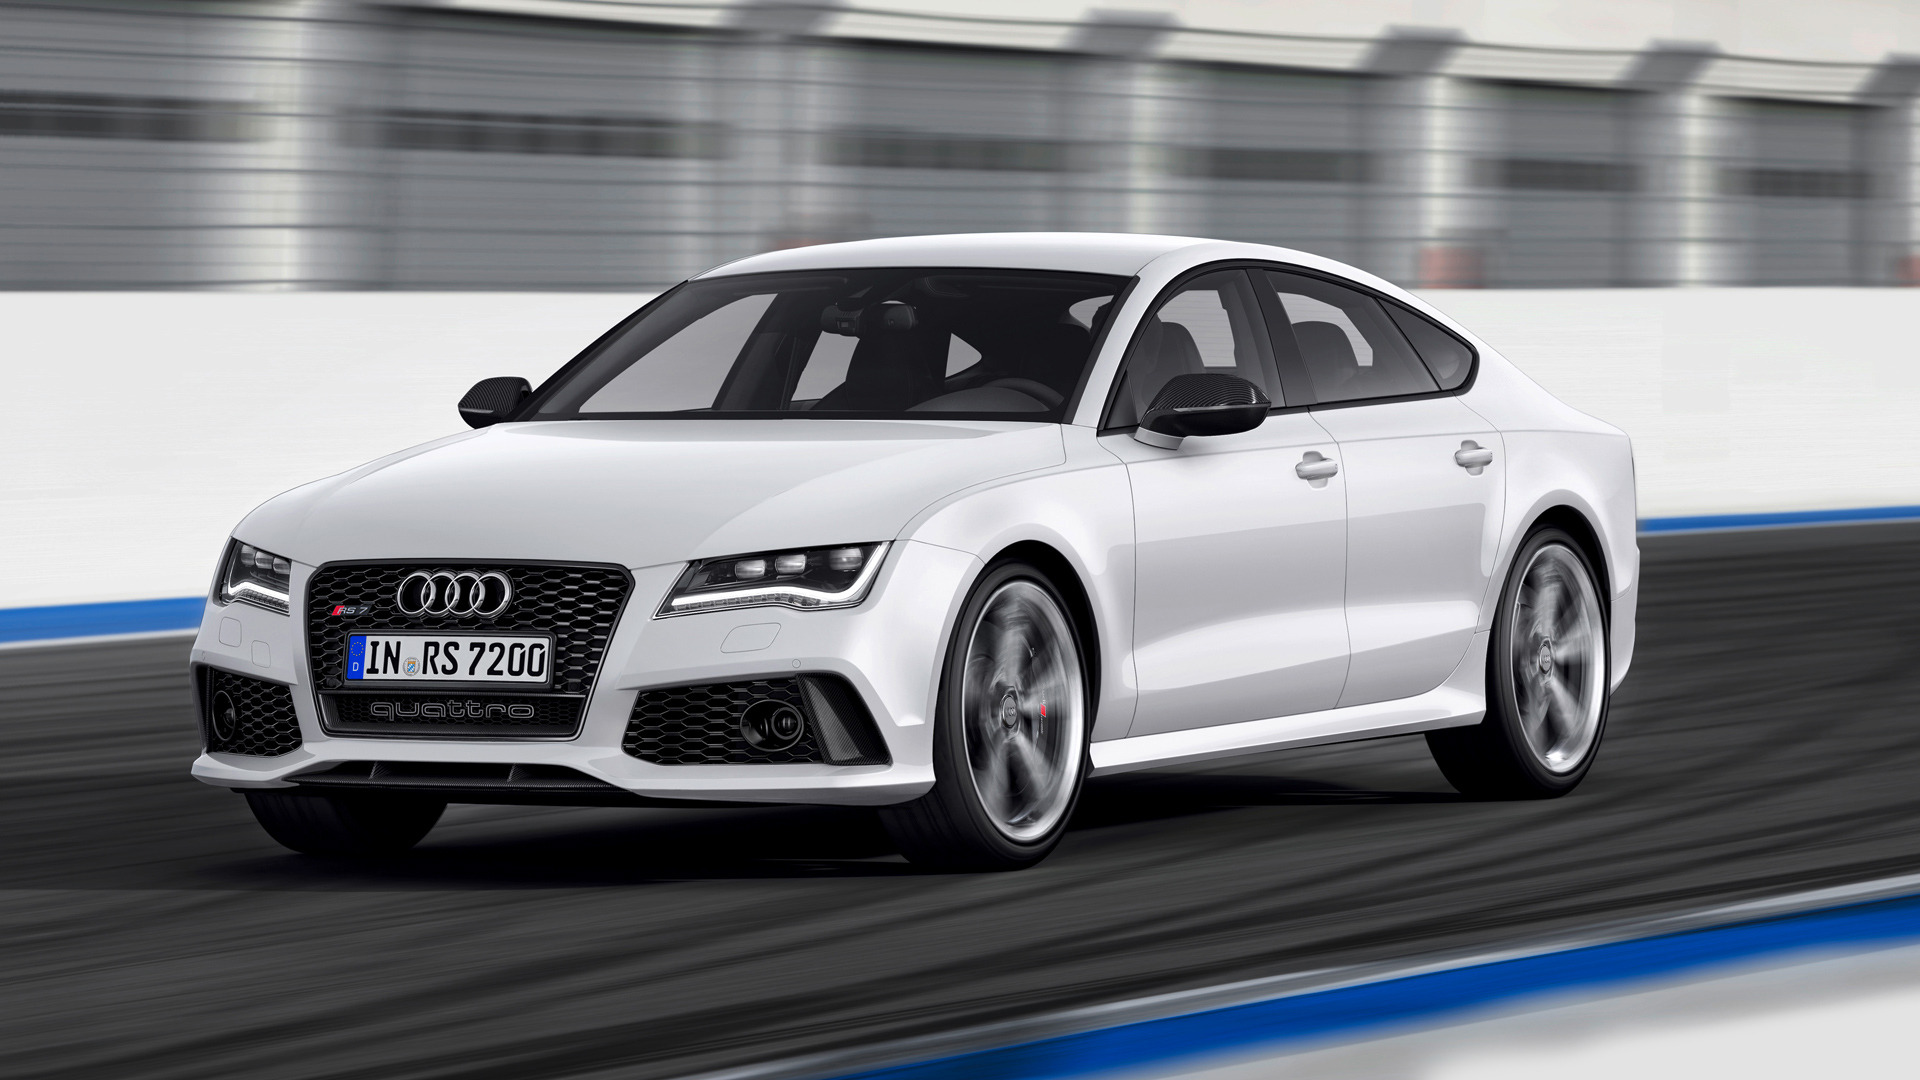 2014 Audi Rs7 Sportback - Audi Cars Hd Images Download - HD Wallpaper 